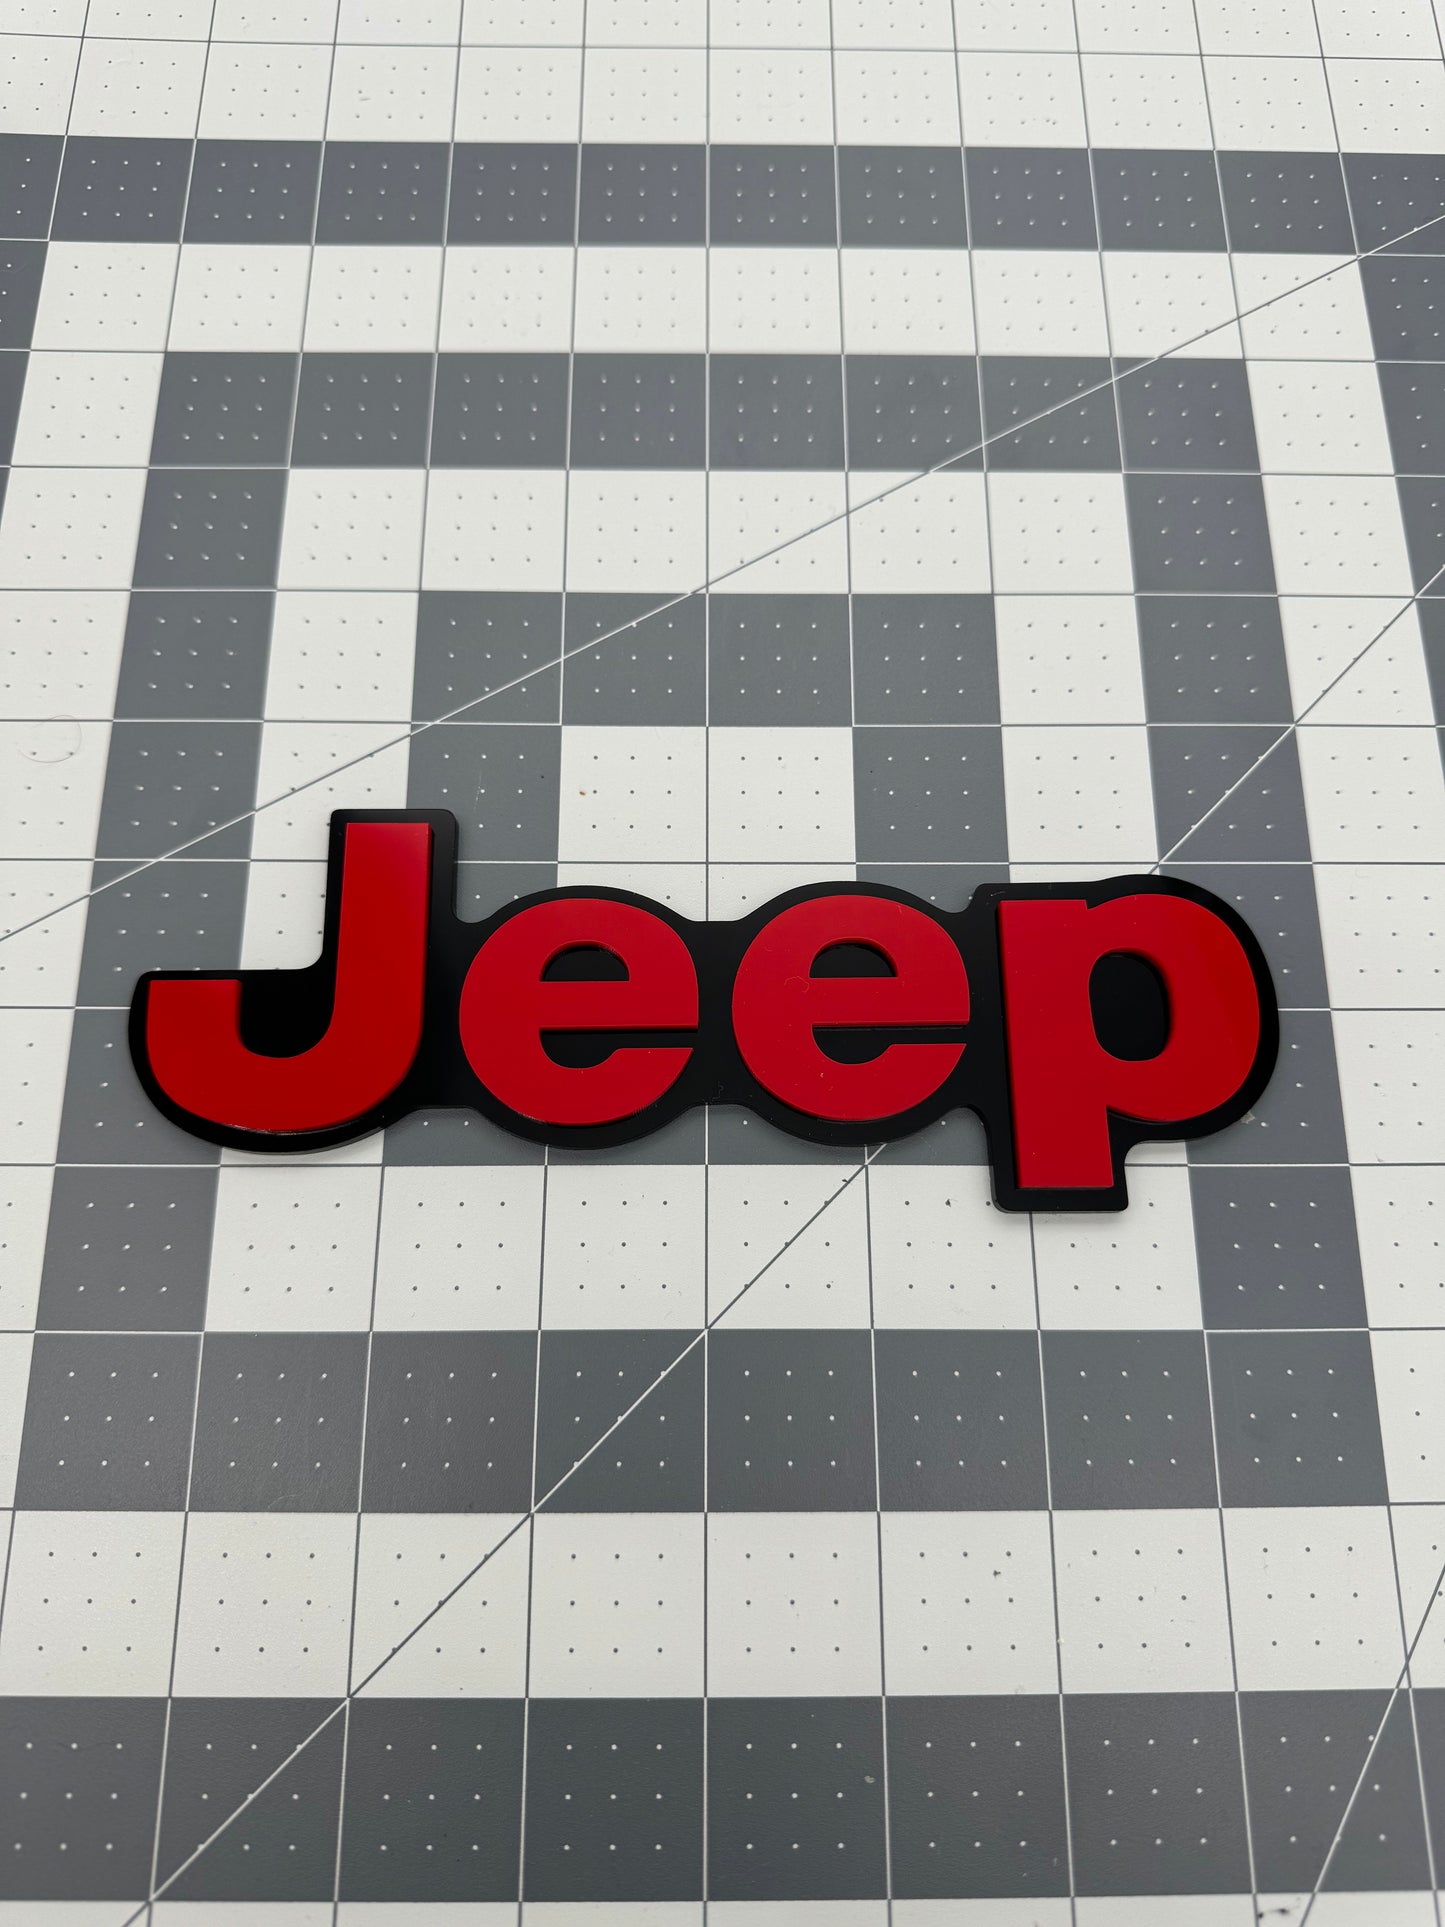 Jeep Grand Cherokee rear badge